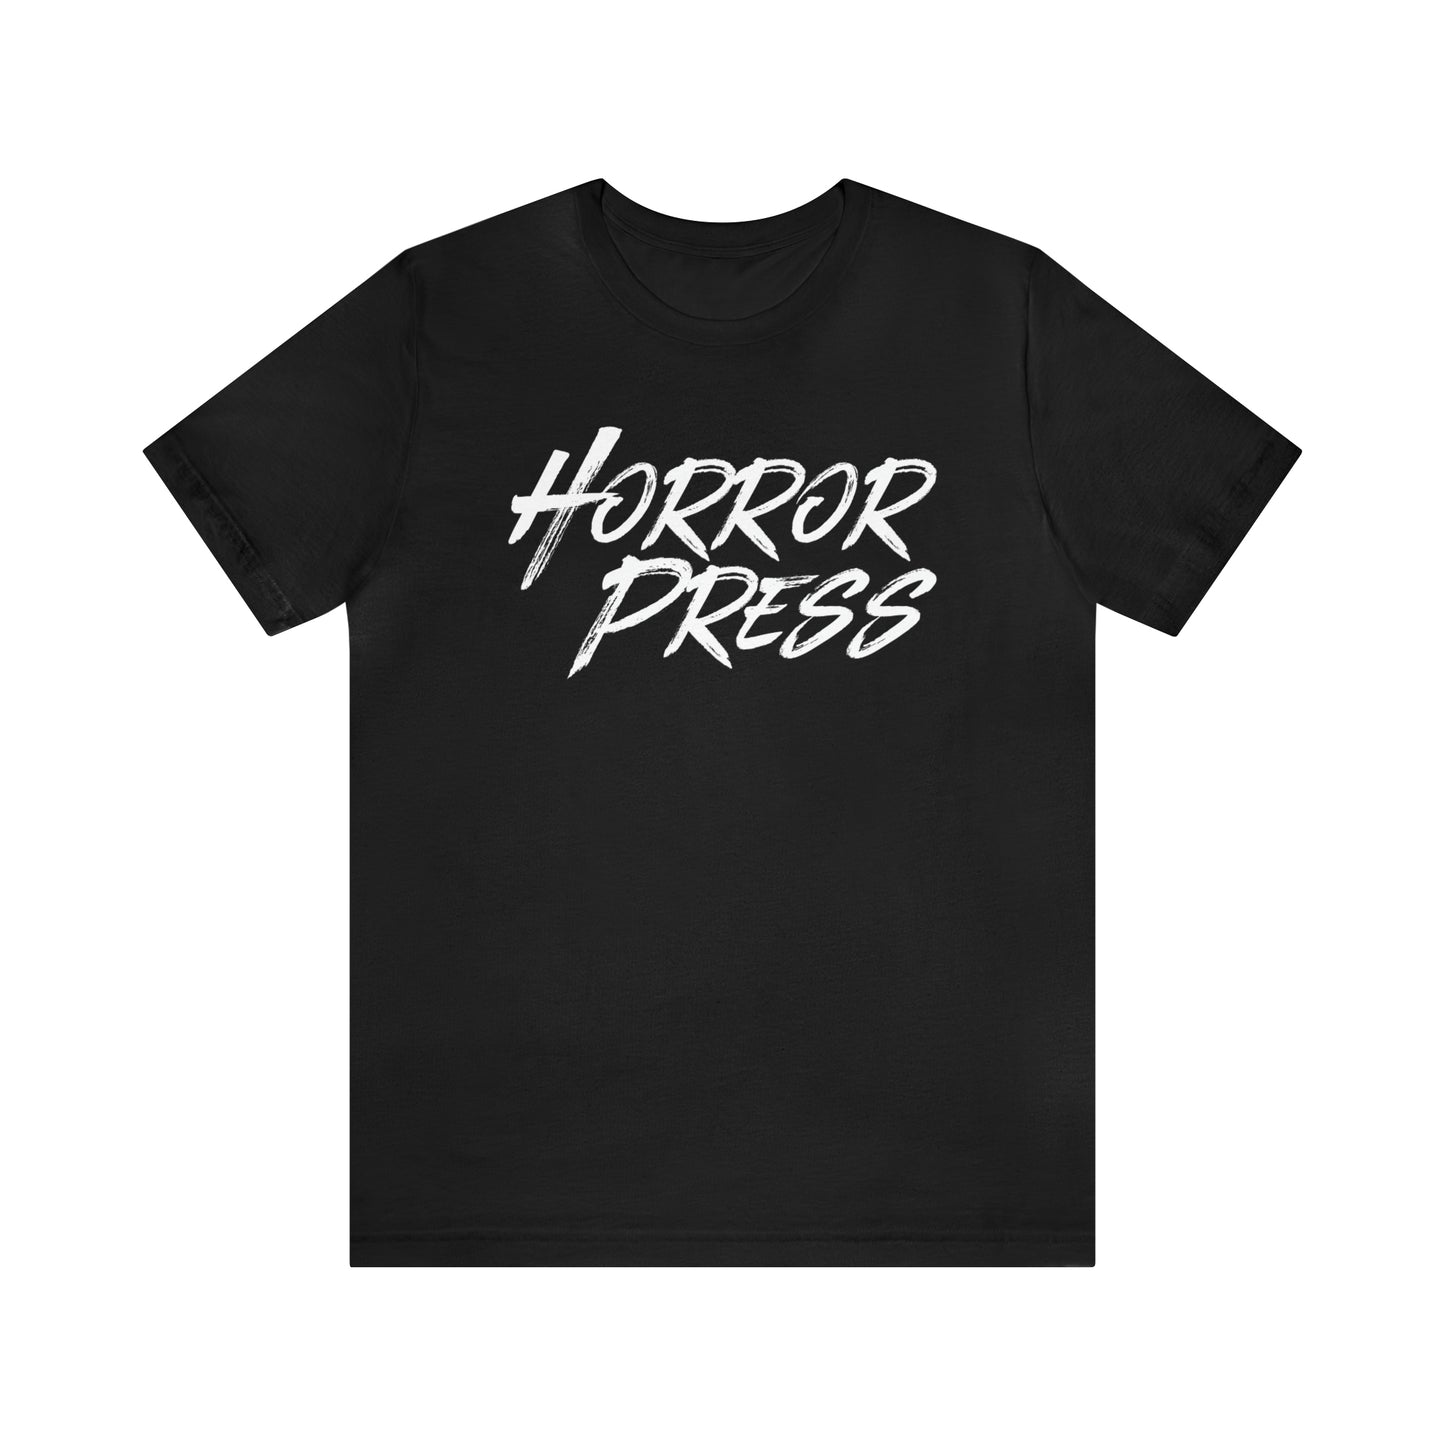 Horror Press T-Shirt - Official Horror Press Unisex Tee - Horror Movie Fan Gift Shirt  - Horror Press Horror Fan Shirt - Scary Movie Fan Shirt - Horror Game Fan Tee - White on Black T-Shirt